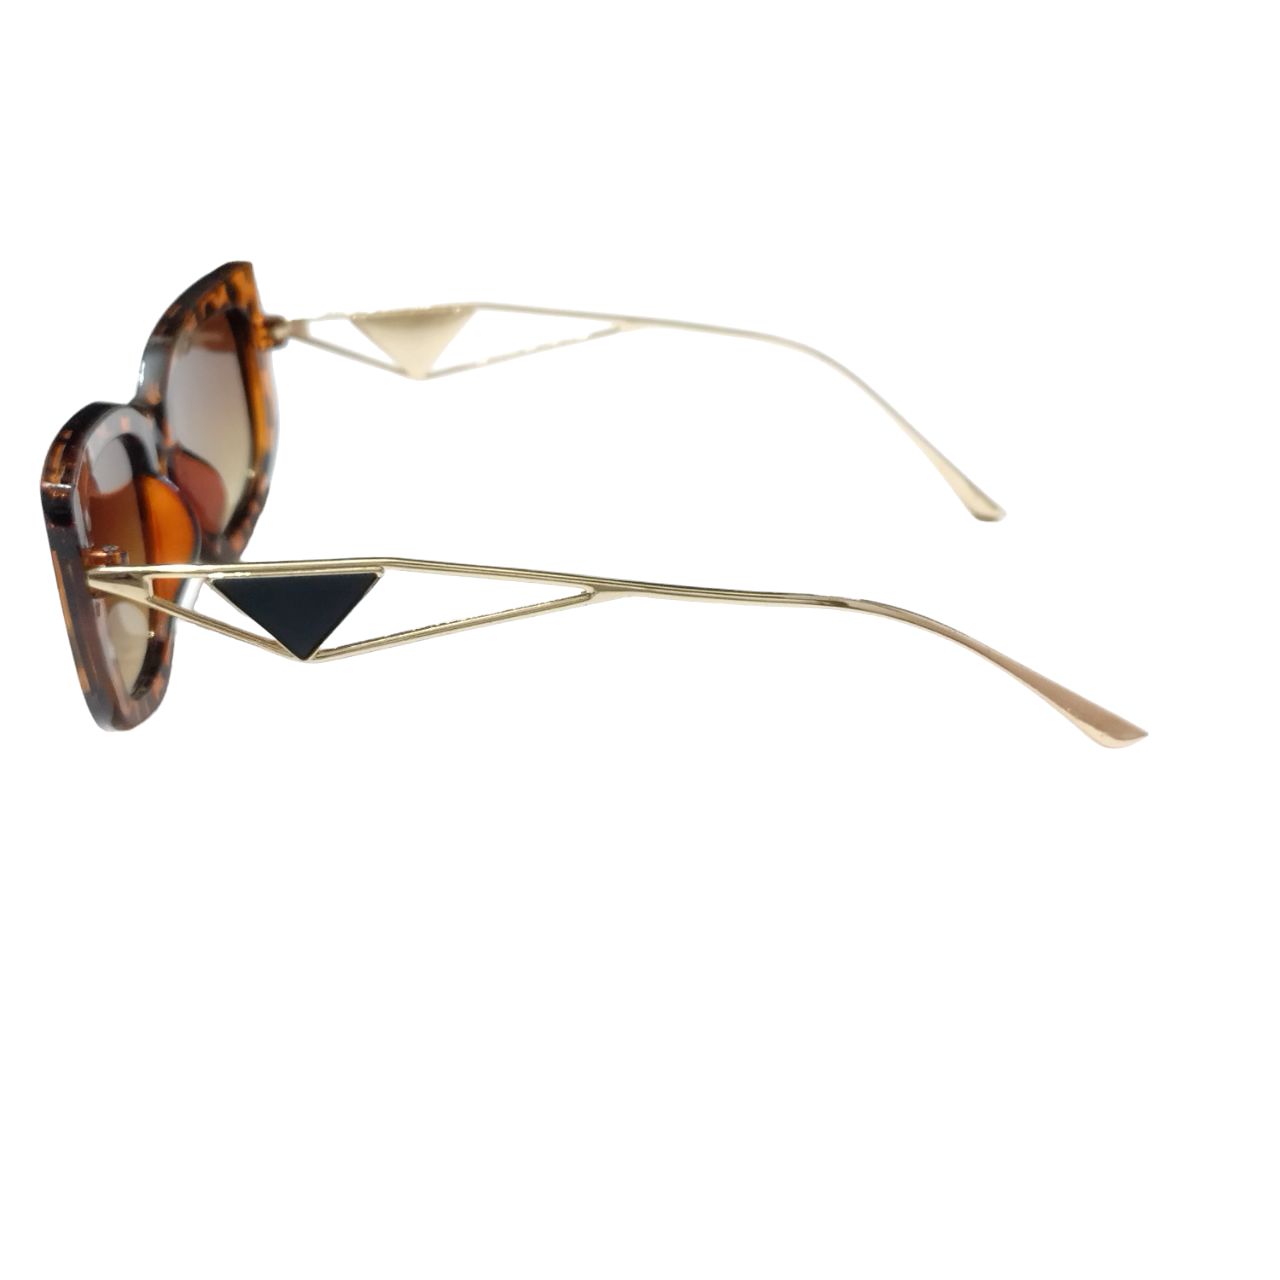 Designer Brown Print Sunglasses for women